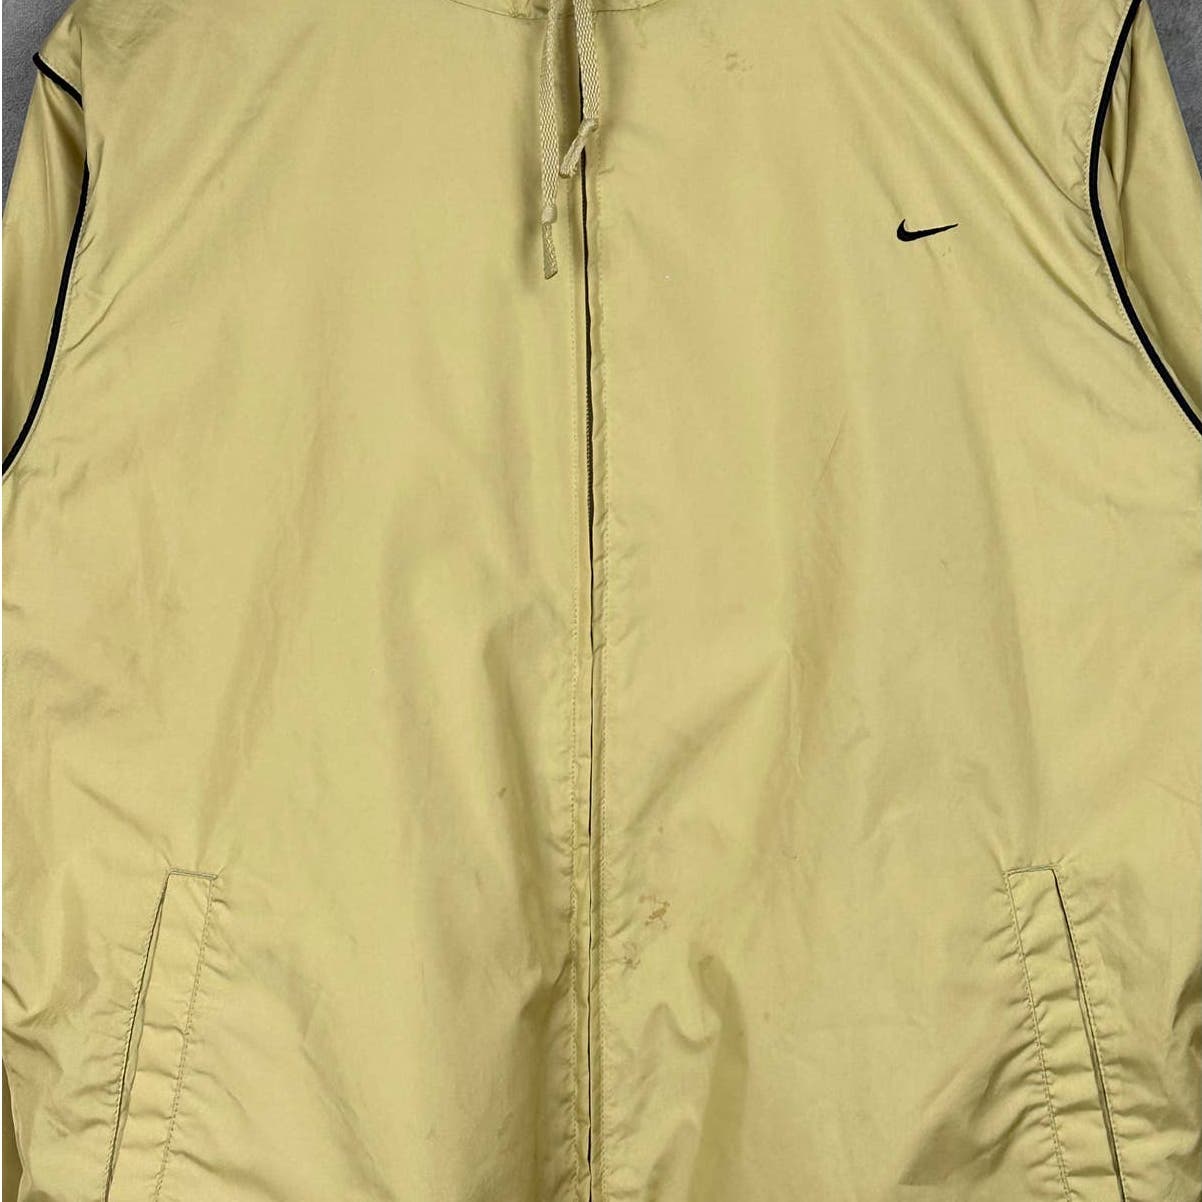 Vintage Nike Windbreaker Jacket Sz M